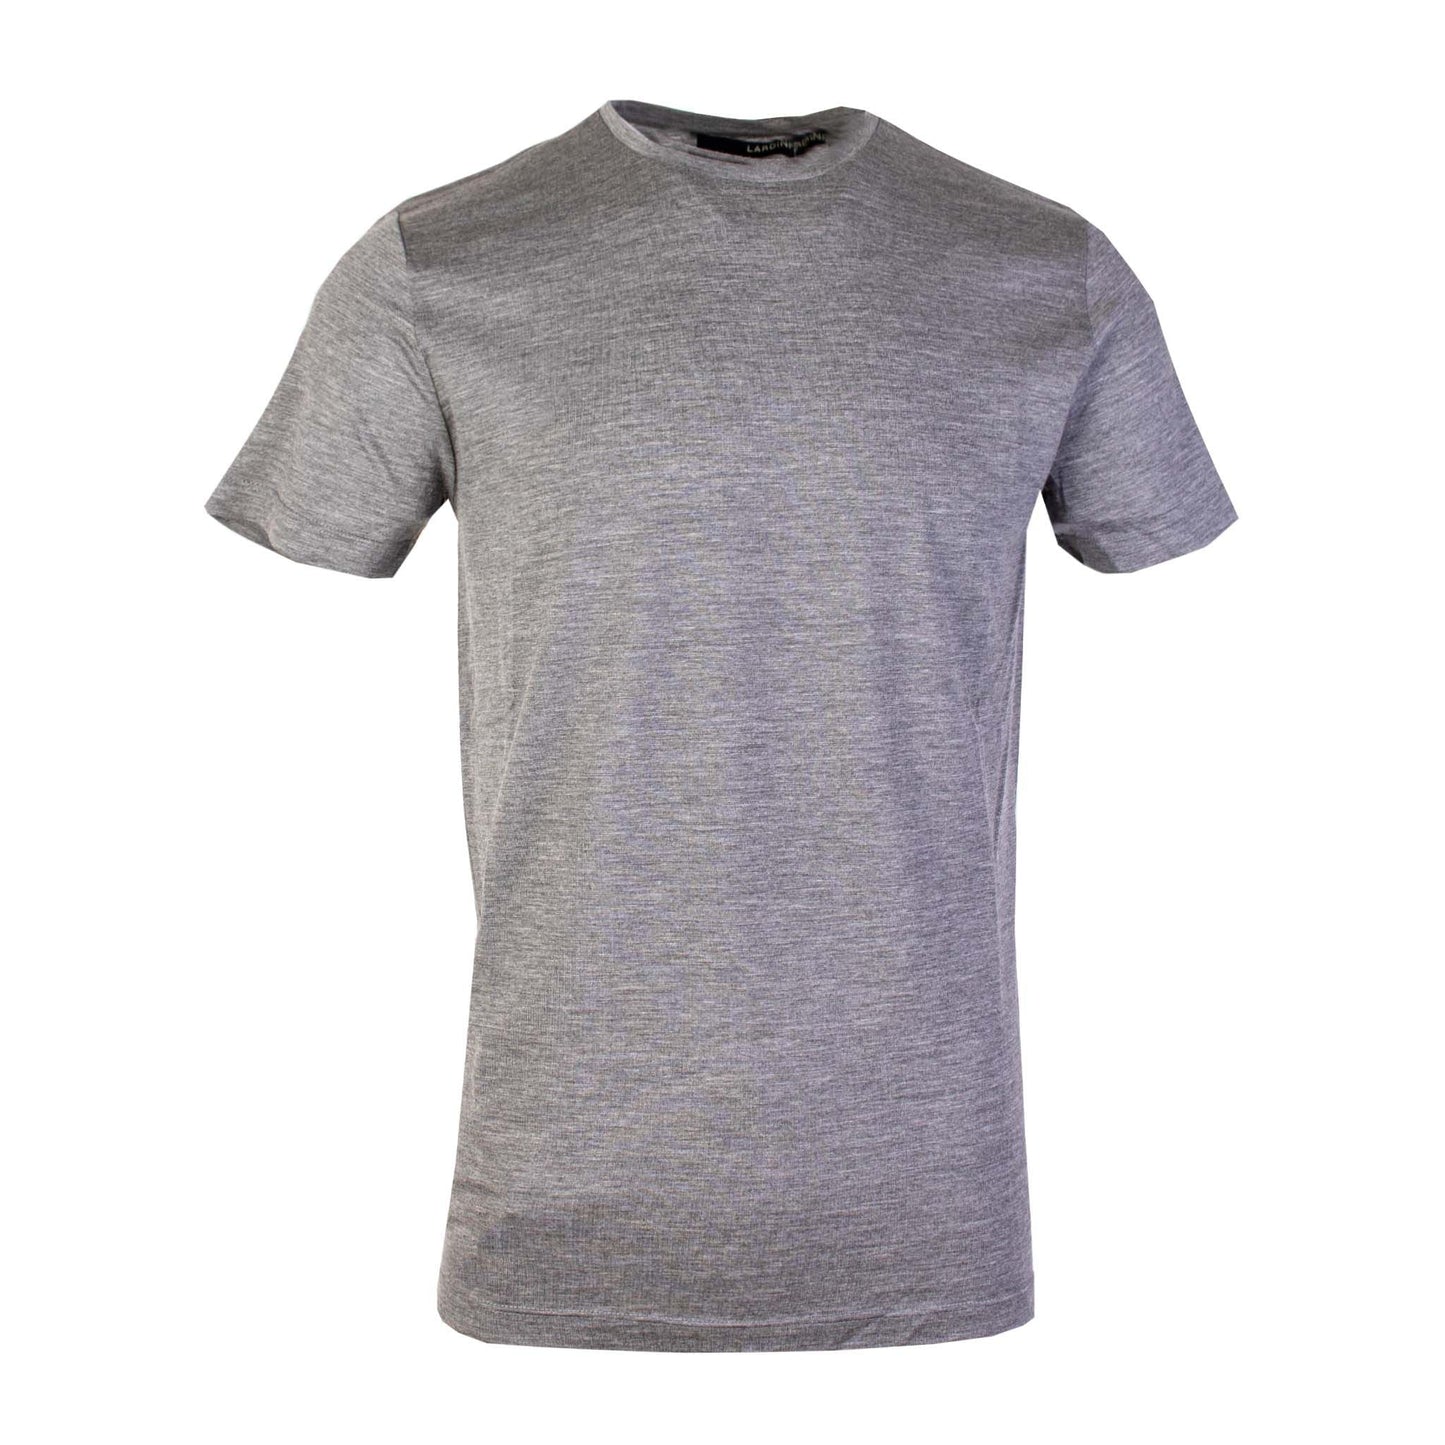 Fashionsarah.com Fashionsarah.com Lardini Blended Wool Grey T-Shirt